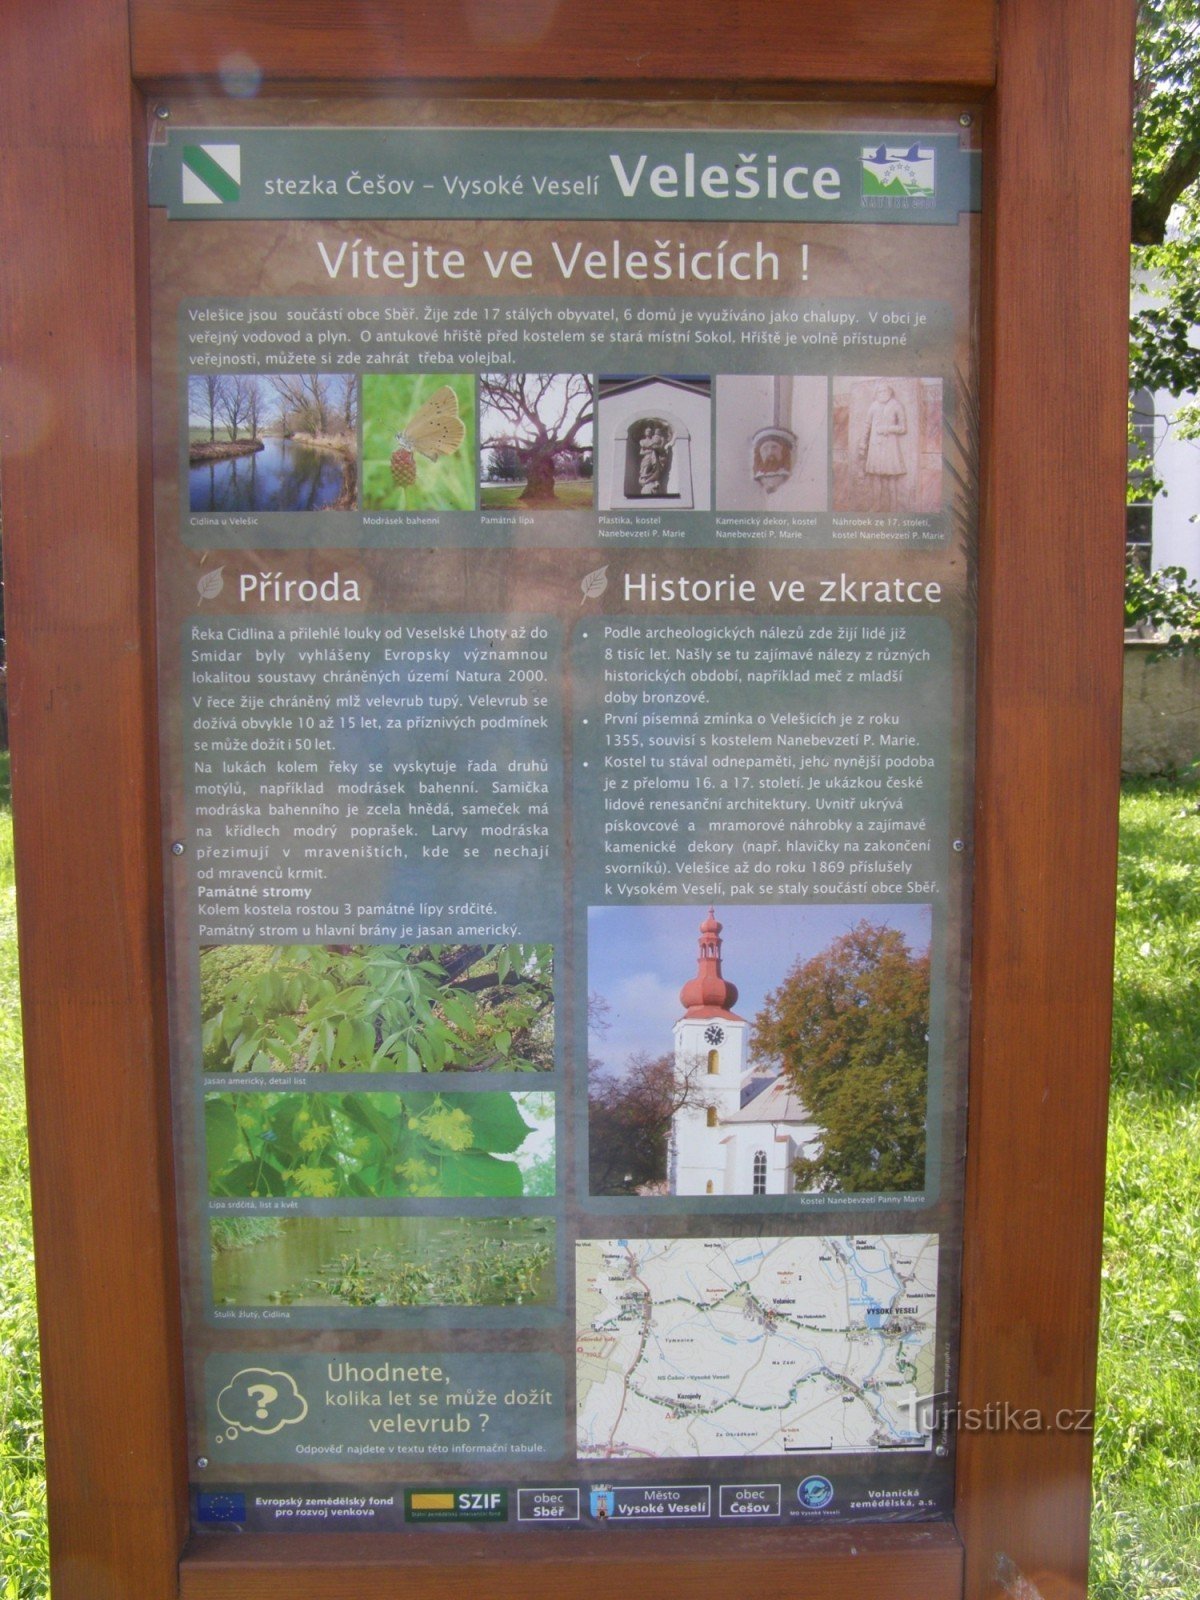 skrzyżowanie NS Češov-Vysoké Veselí - Velešice